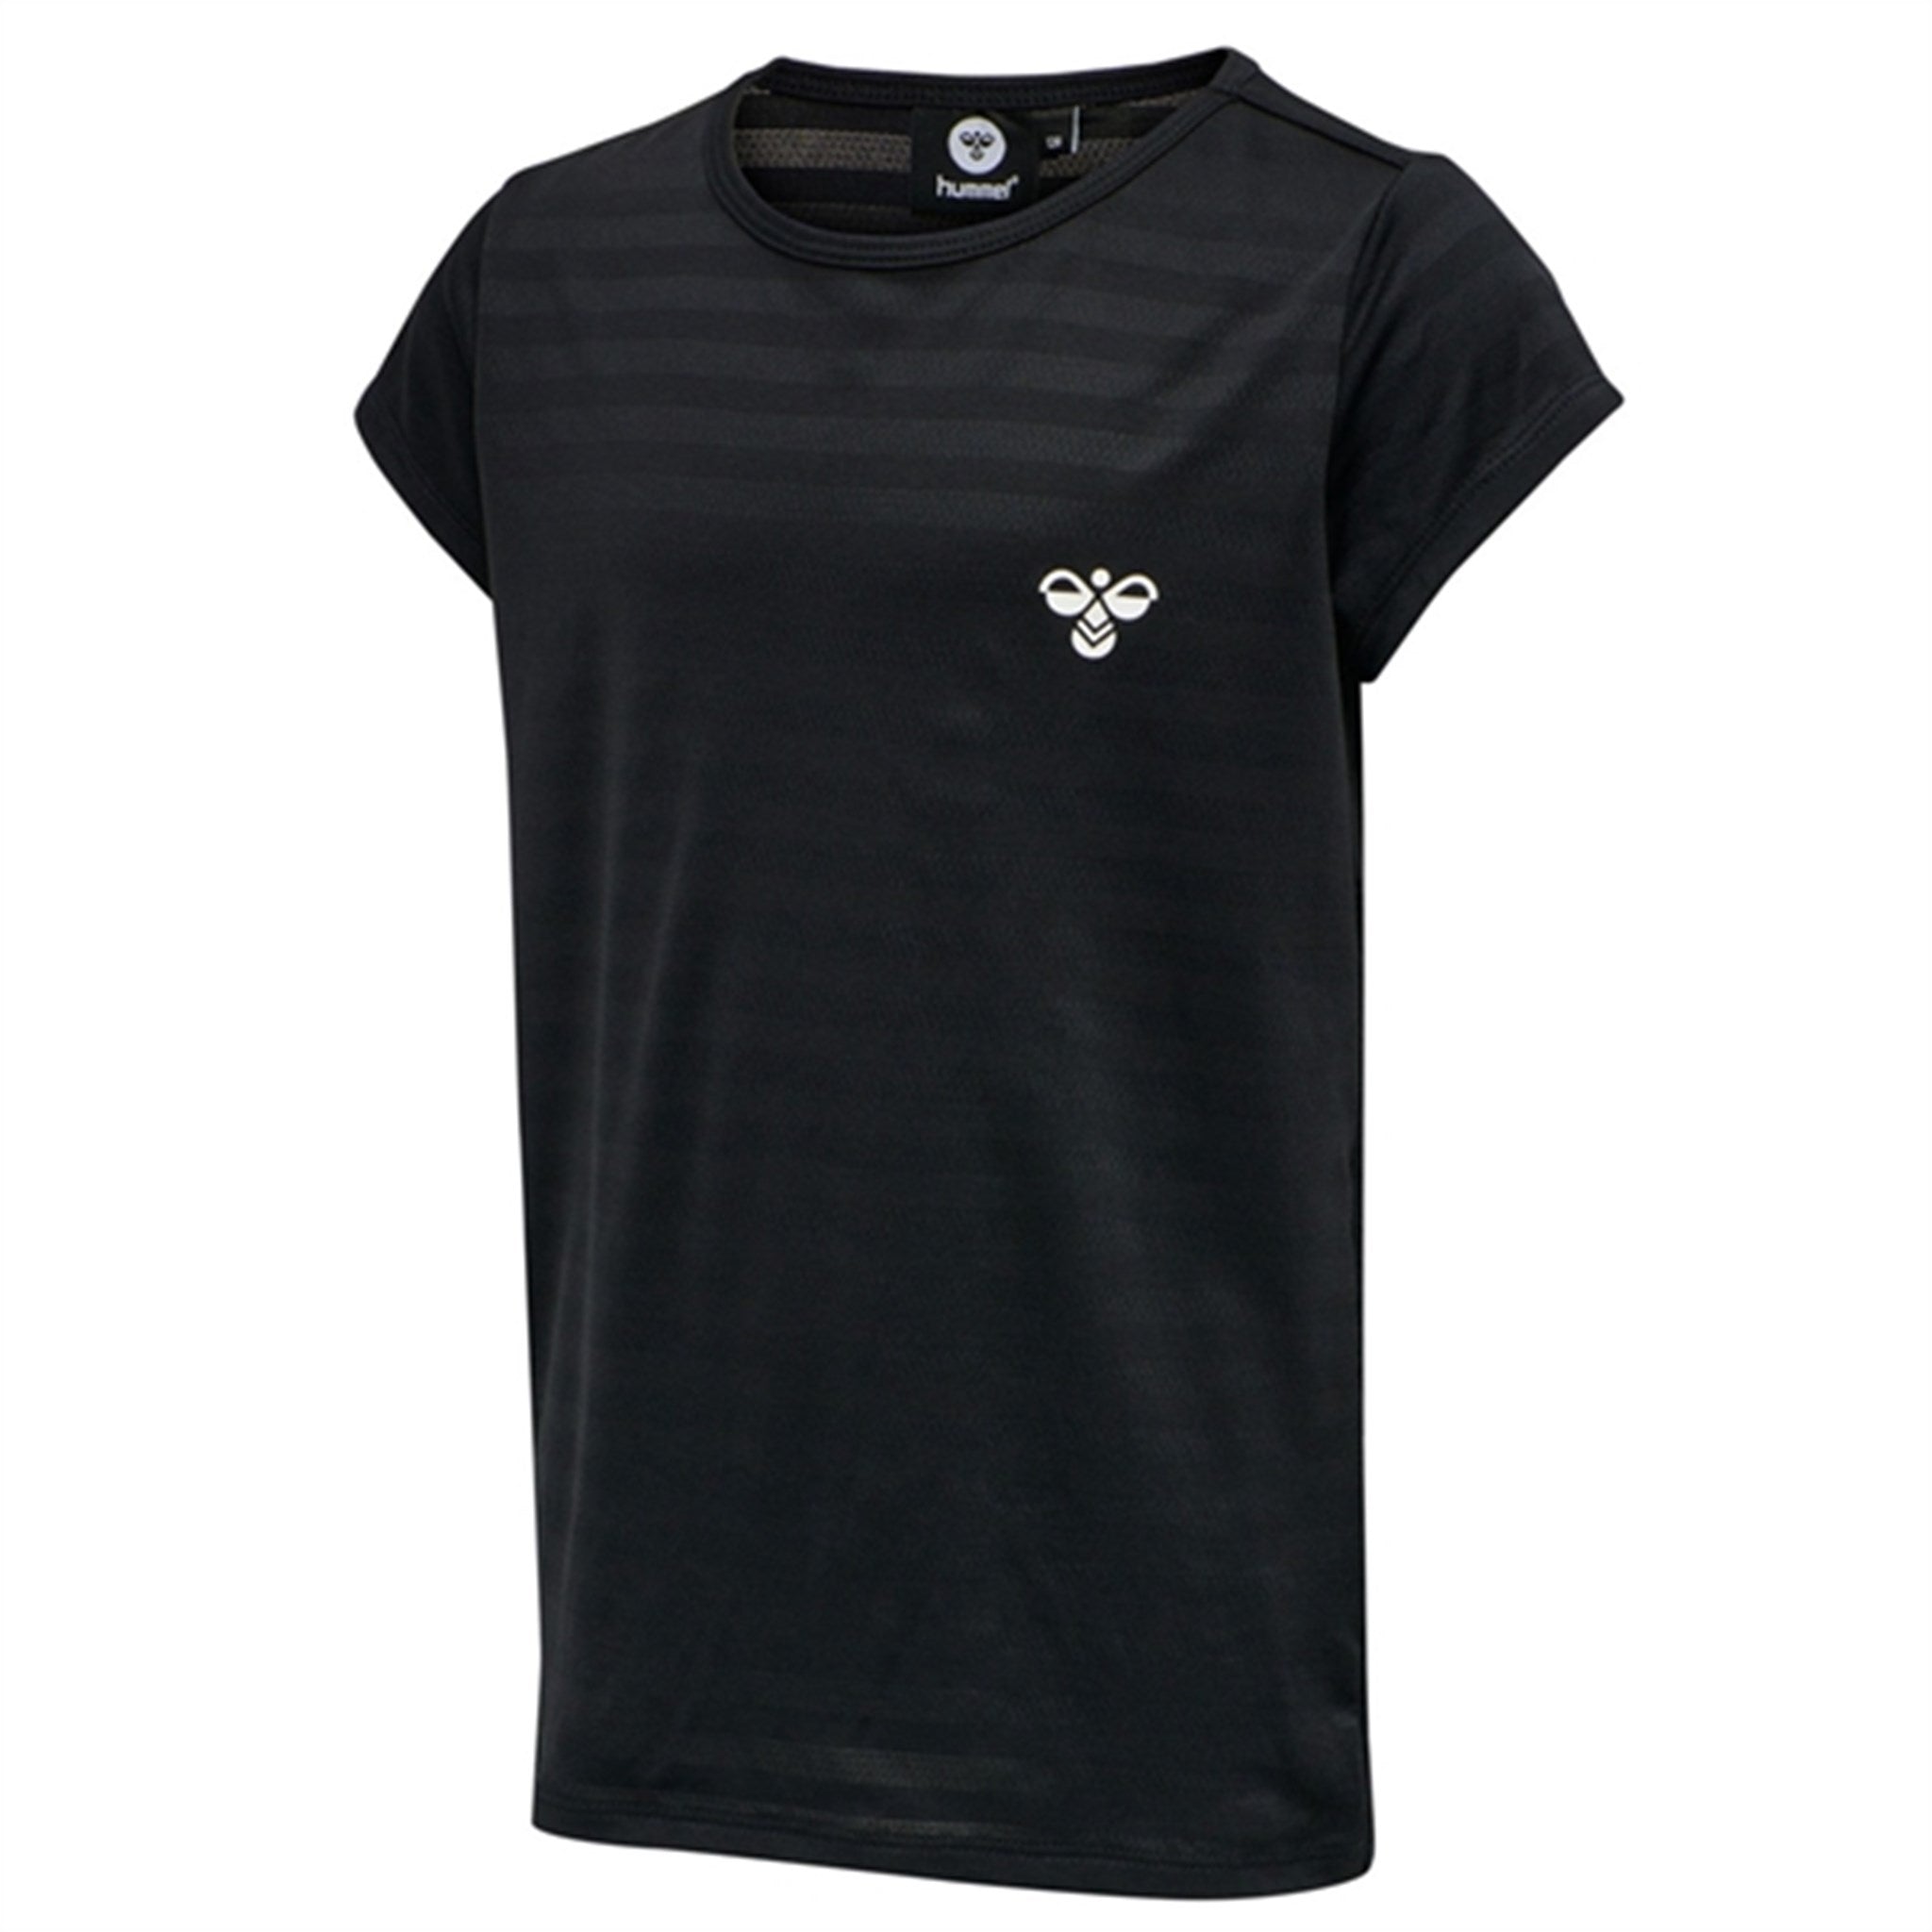 Hummel Black Nappkin T-Shirt 2